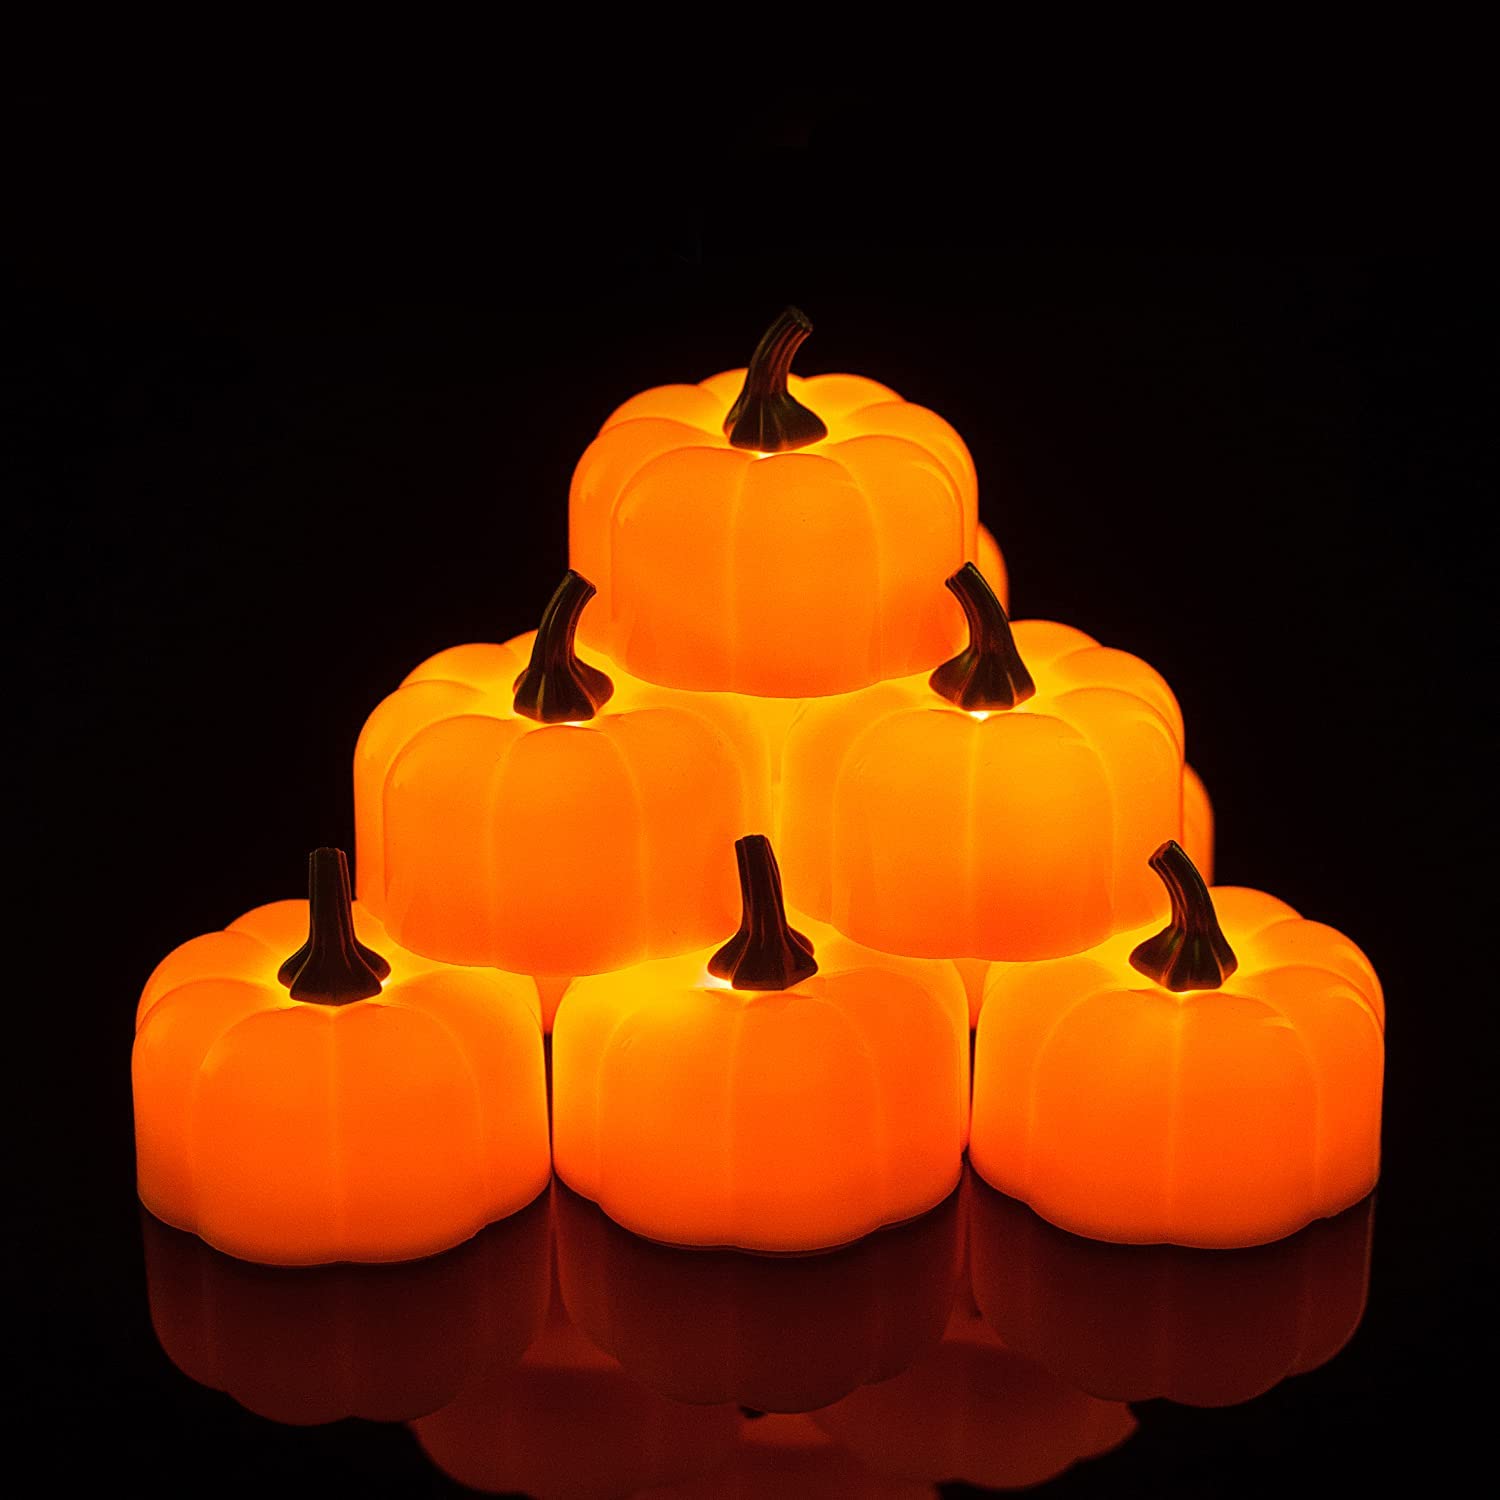  3. Homory 24 Packs Halloween Pumpkins Tealights 